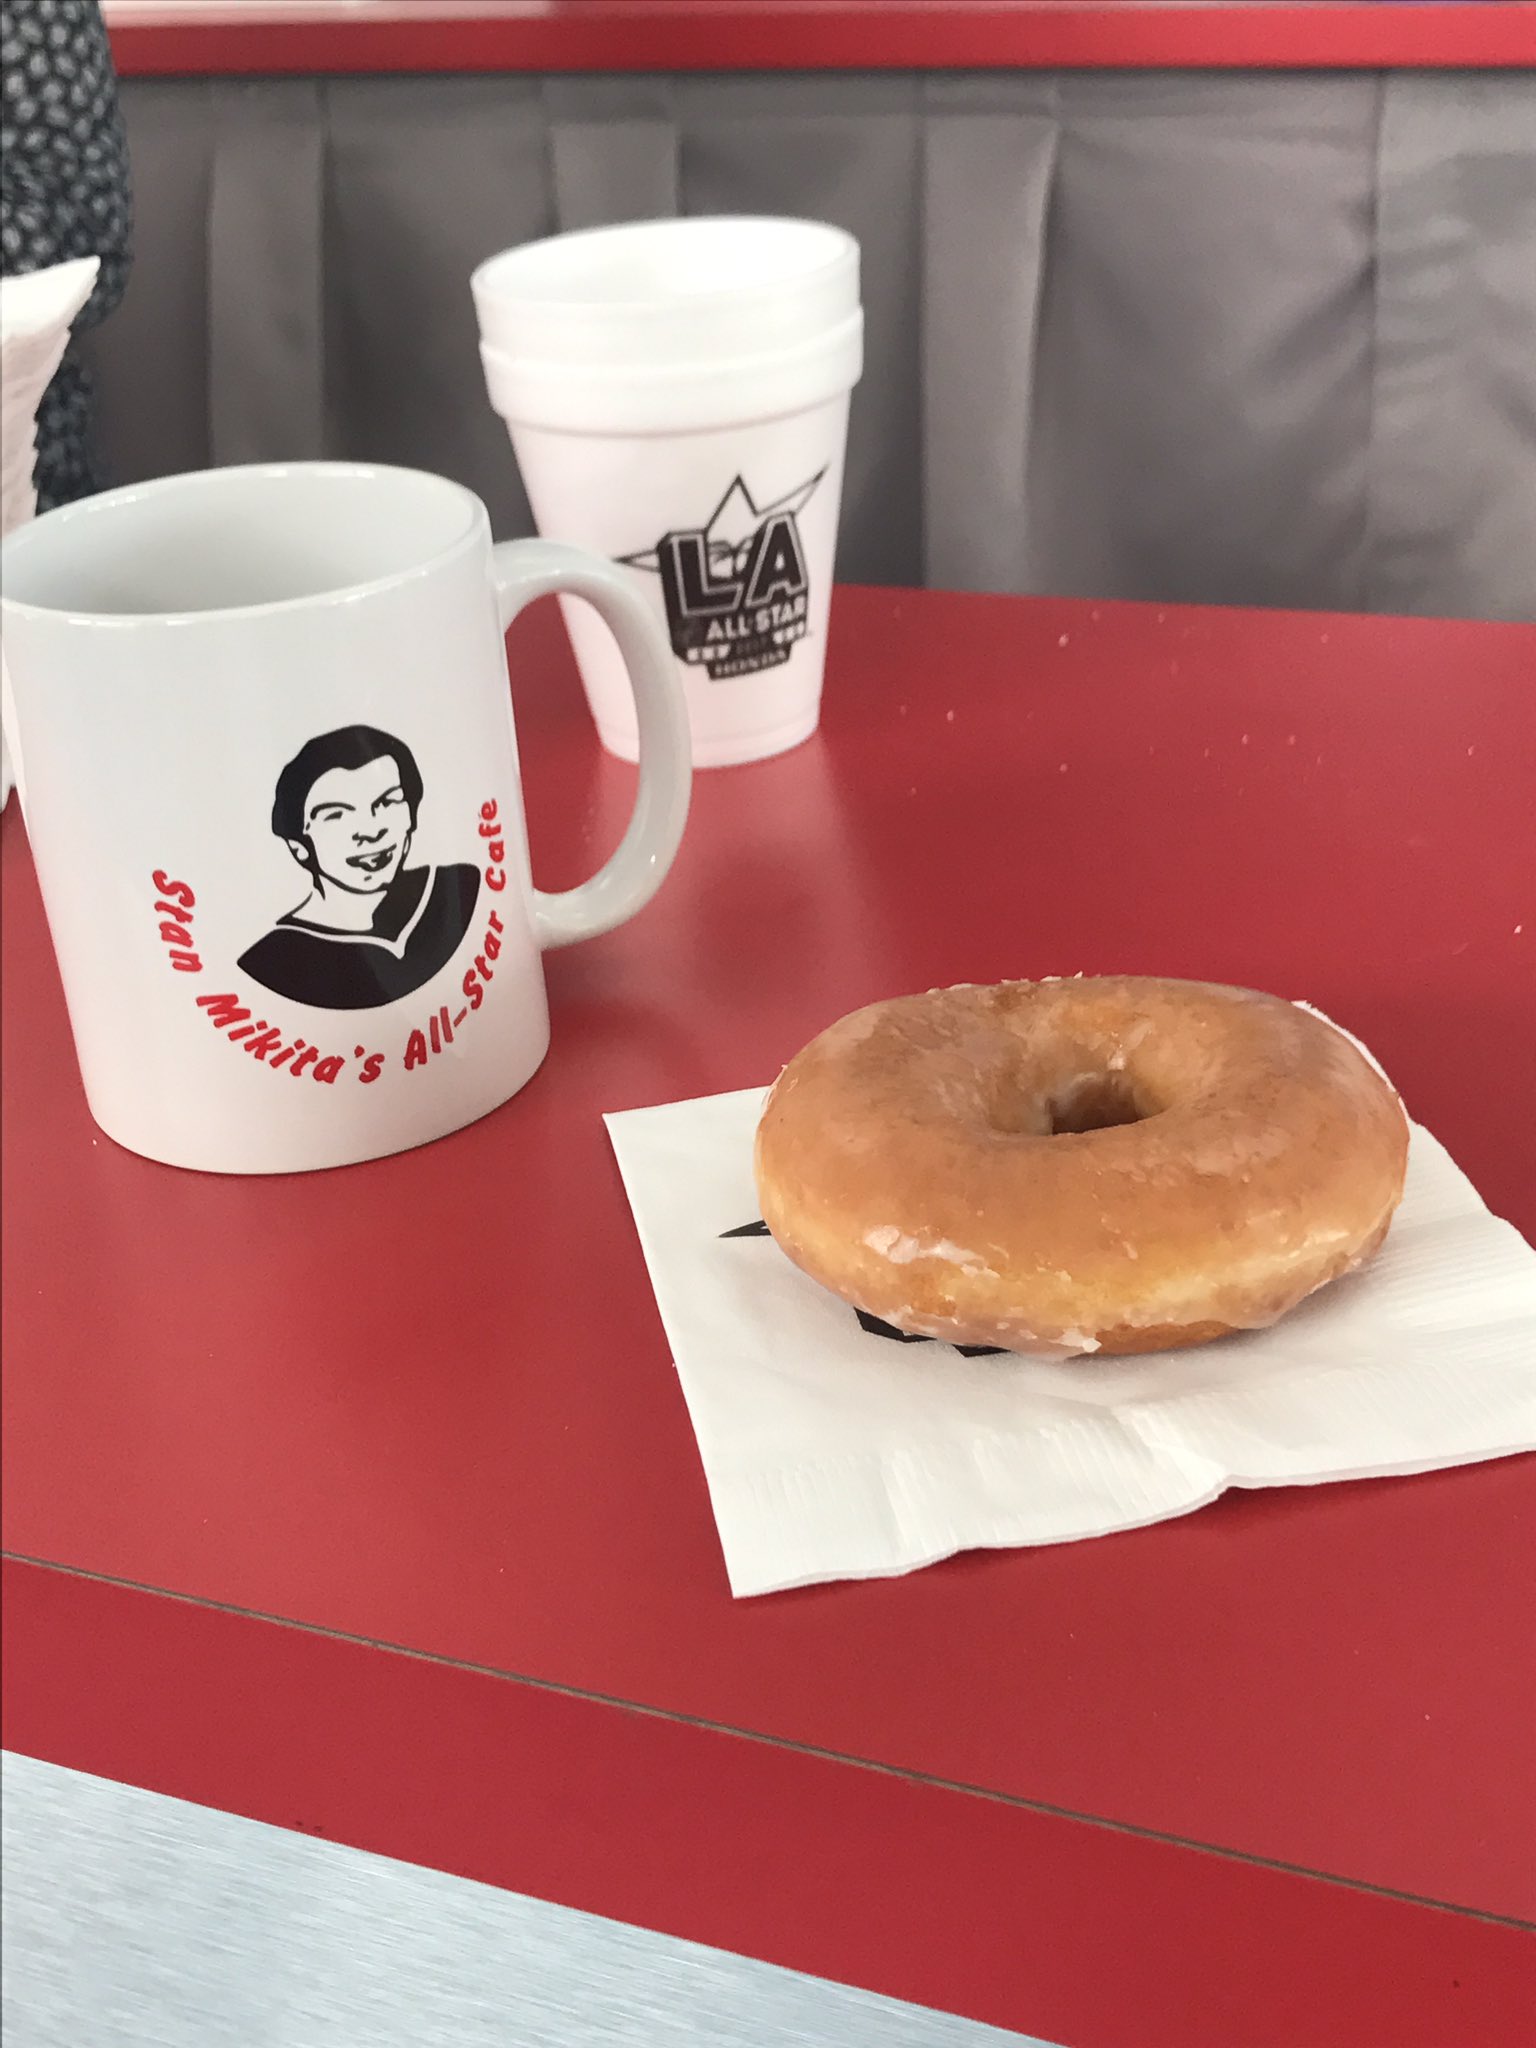 Stan Mikita's Donuts – Nice Mugs!